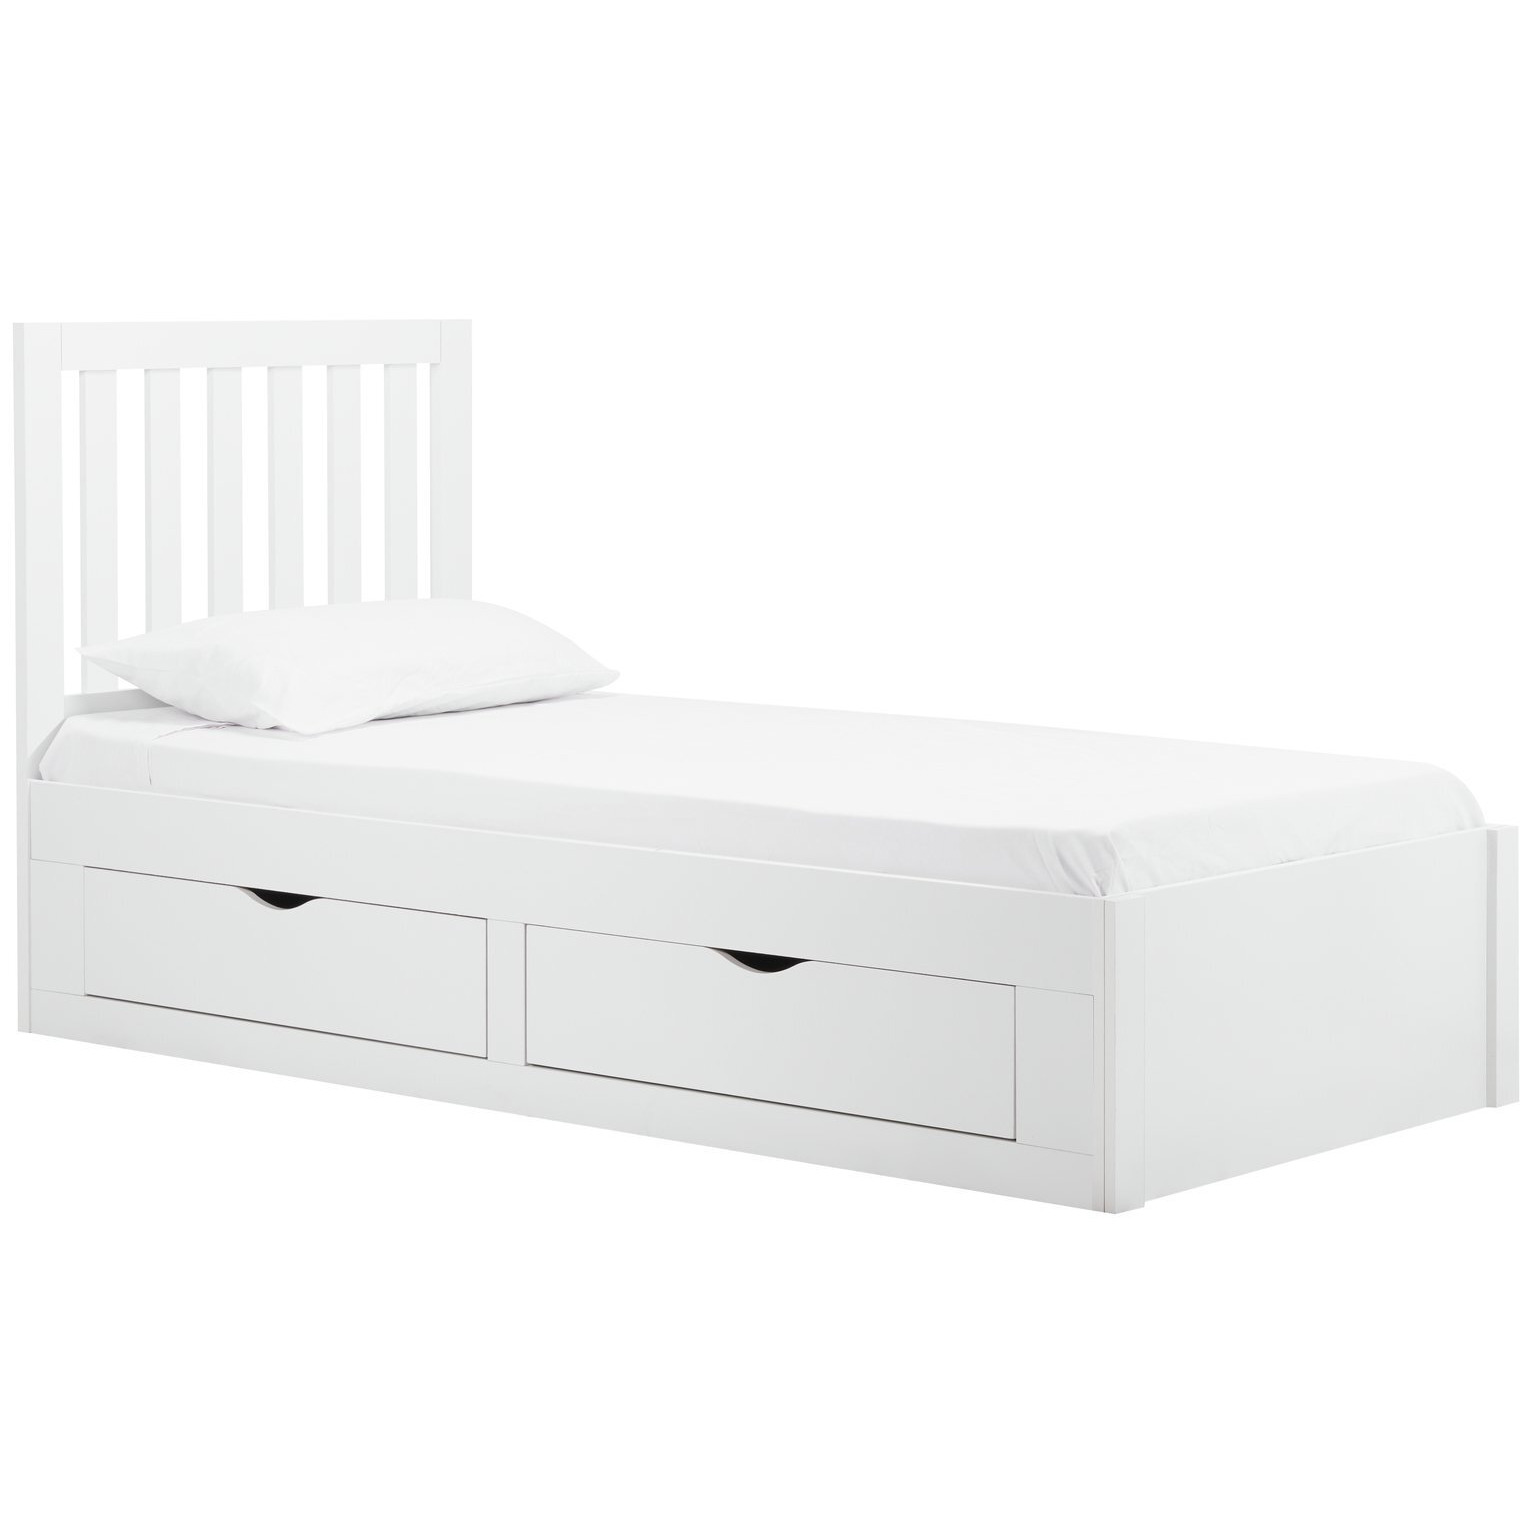 Birlea Appleby Single Bed Frame with Mattress - White - image 1